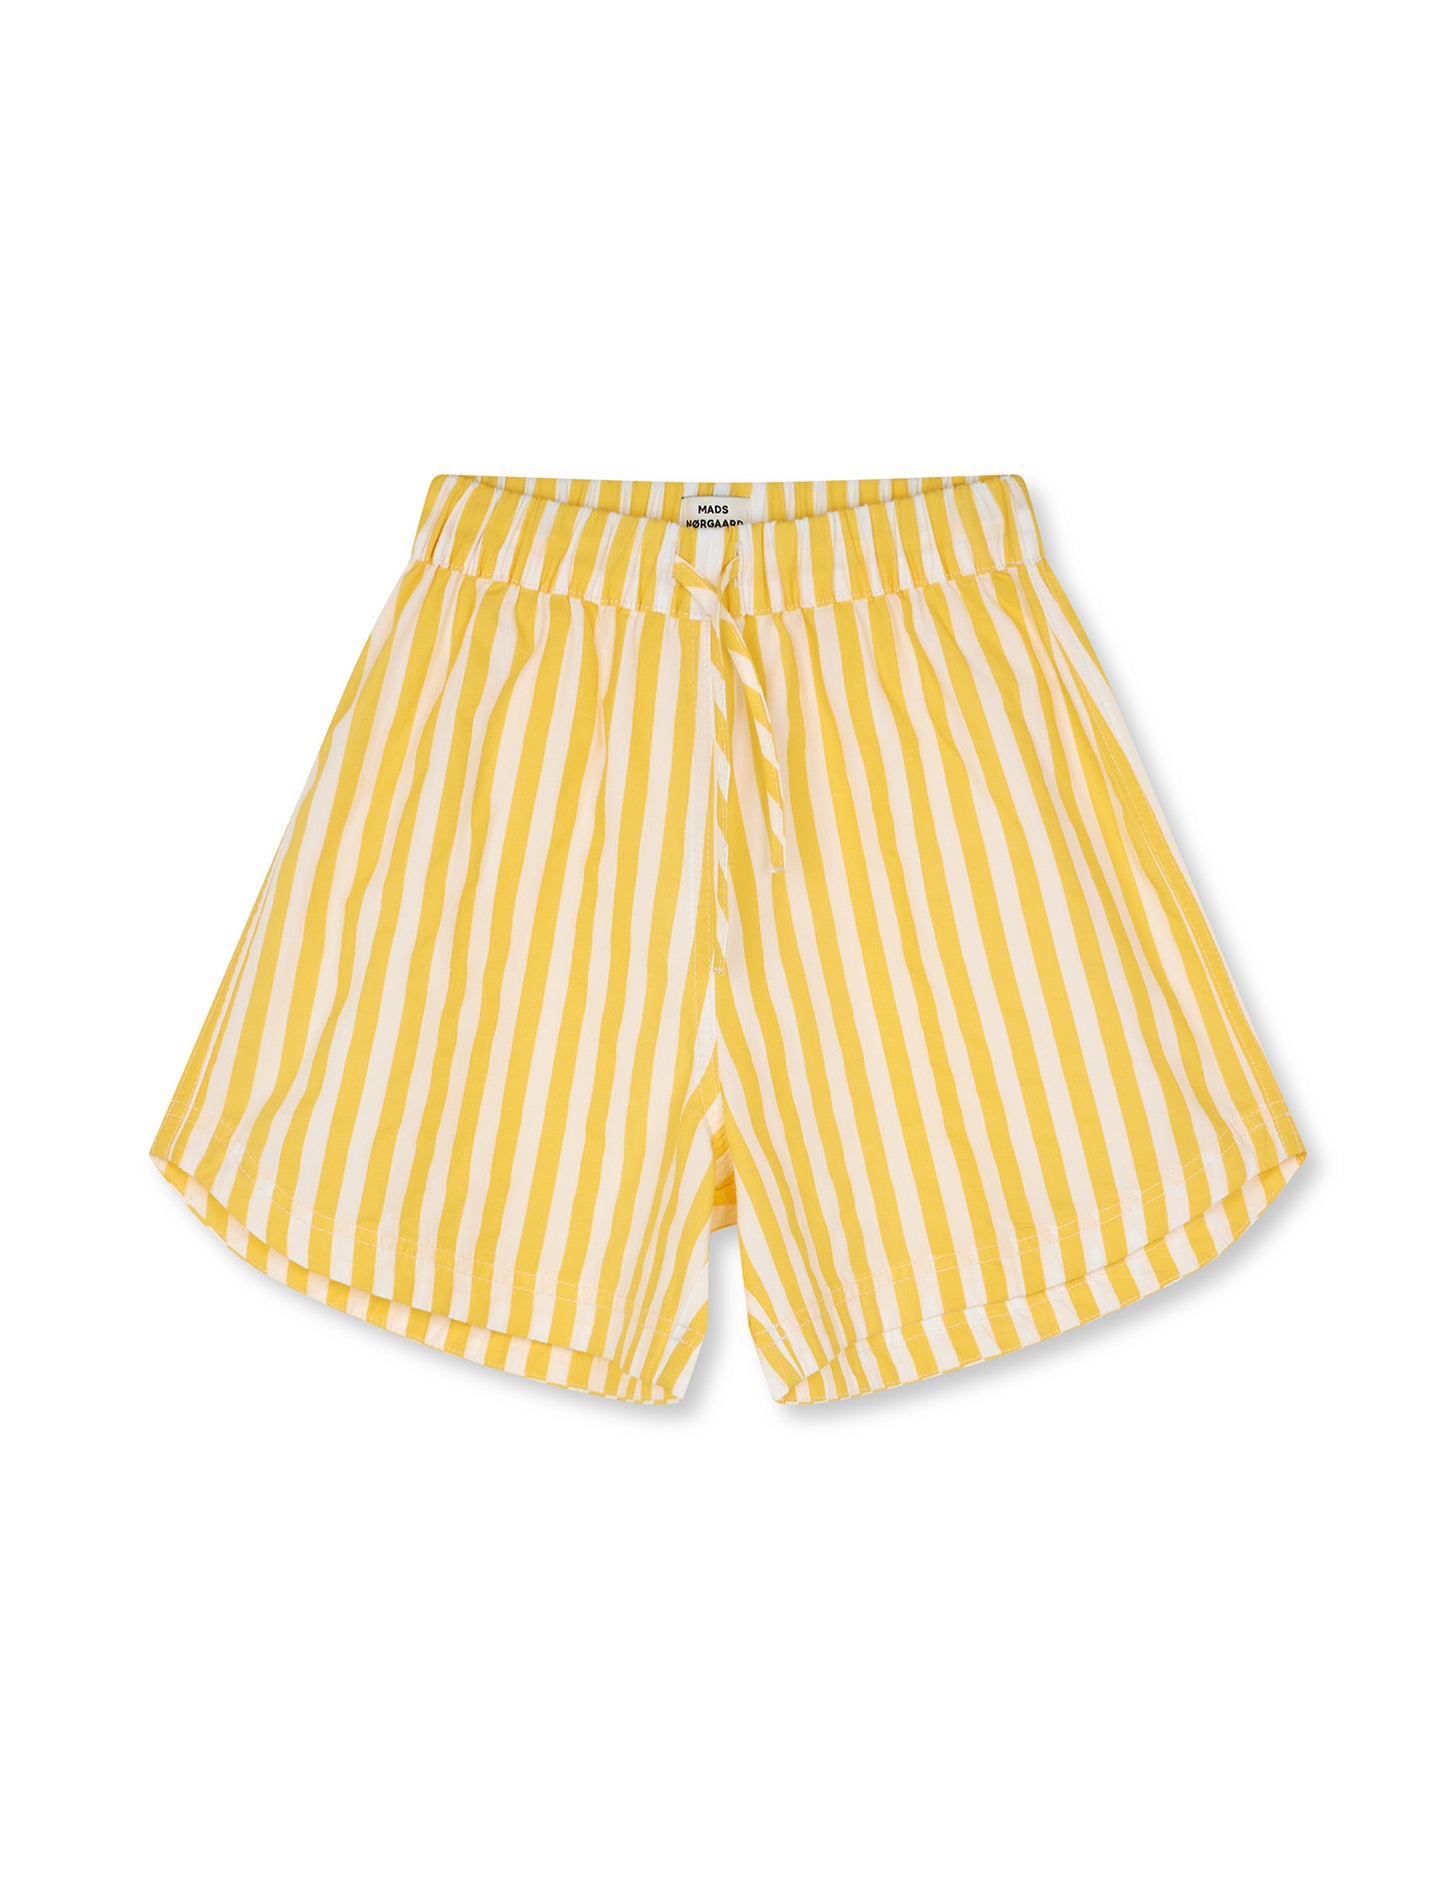 Sacky Pio Shorts, White Alyssum/Lemon Zest